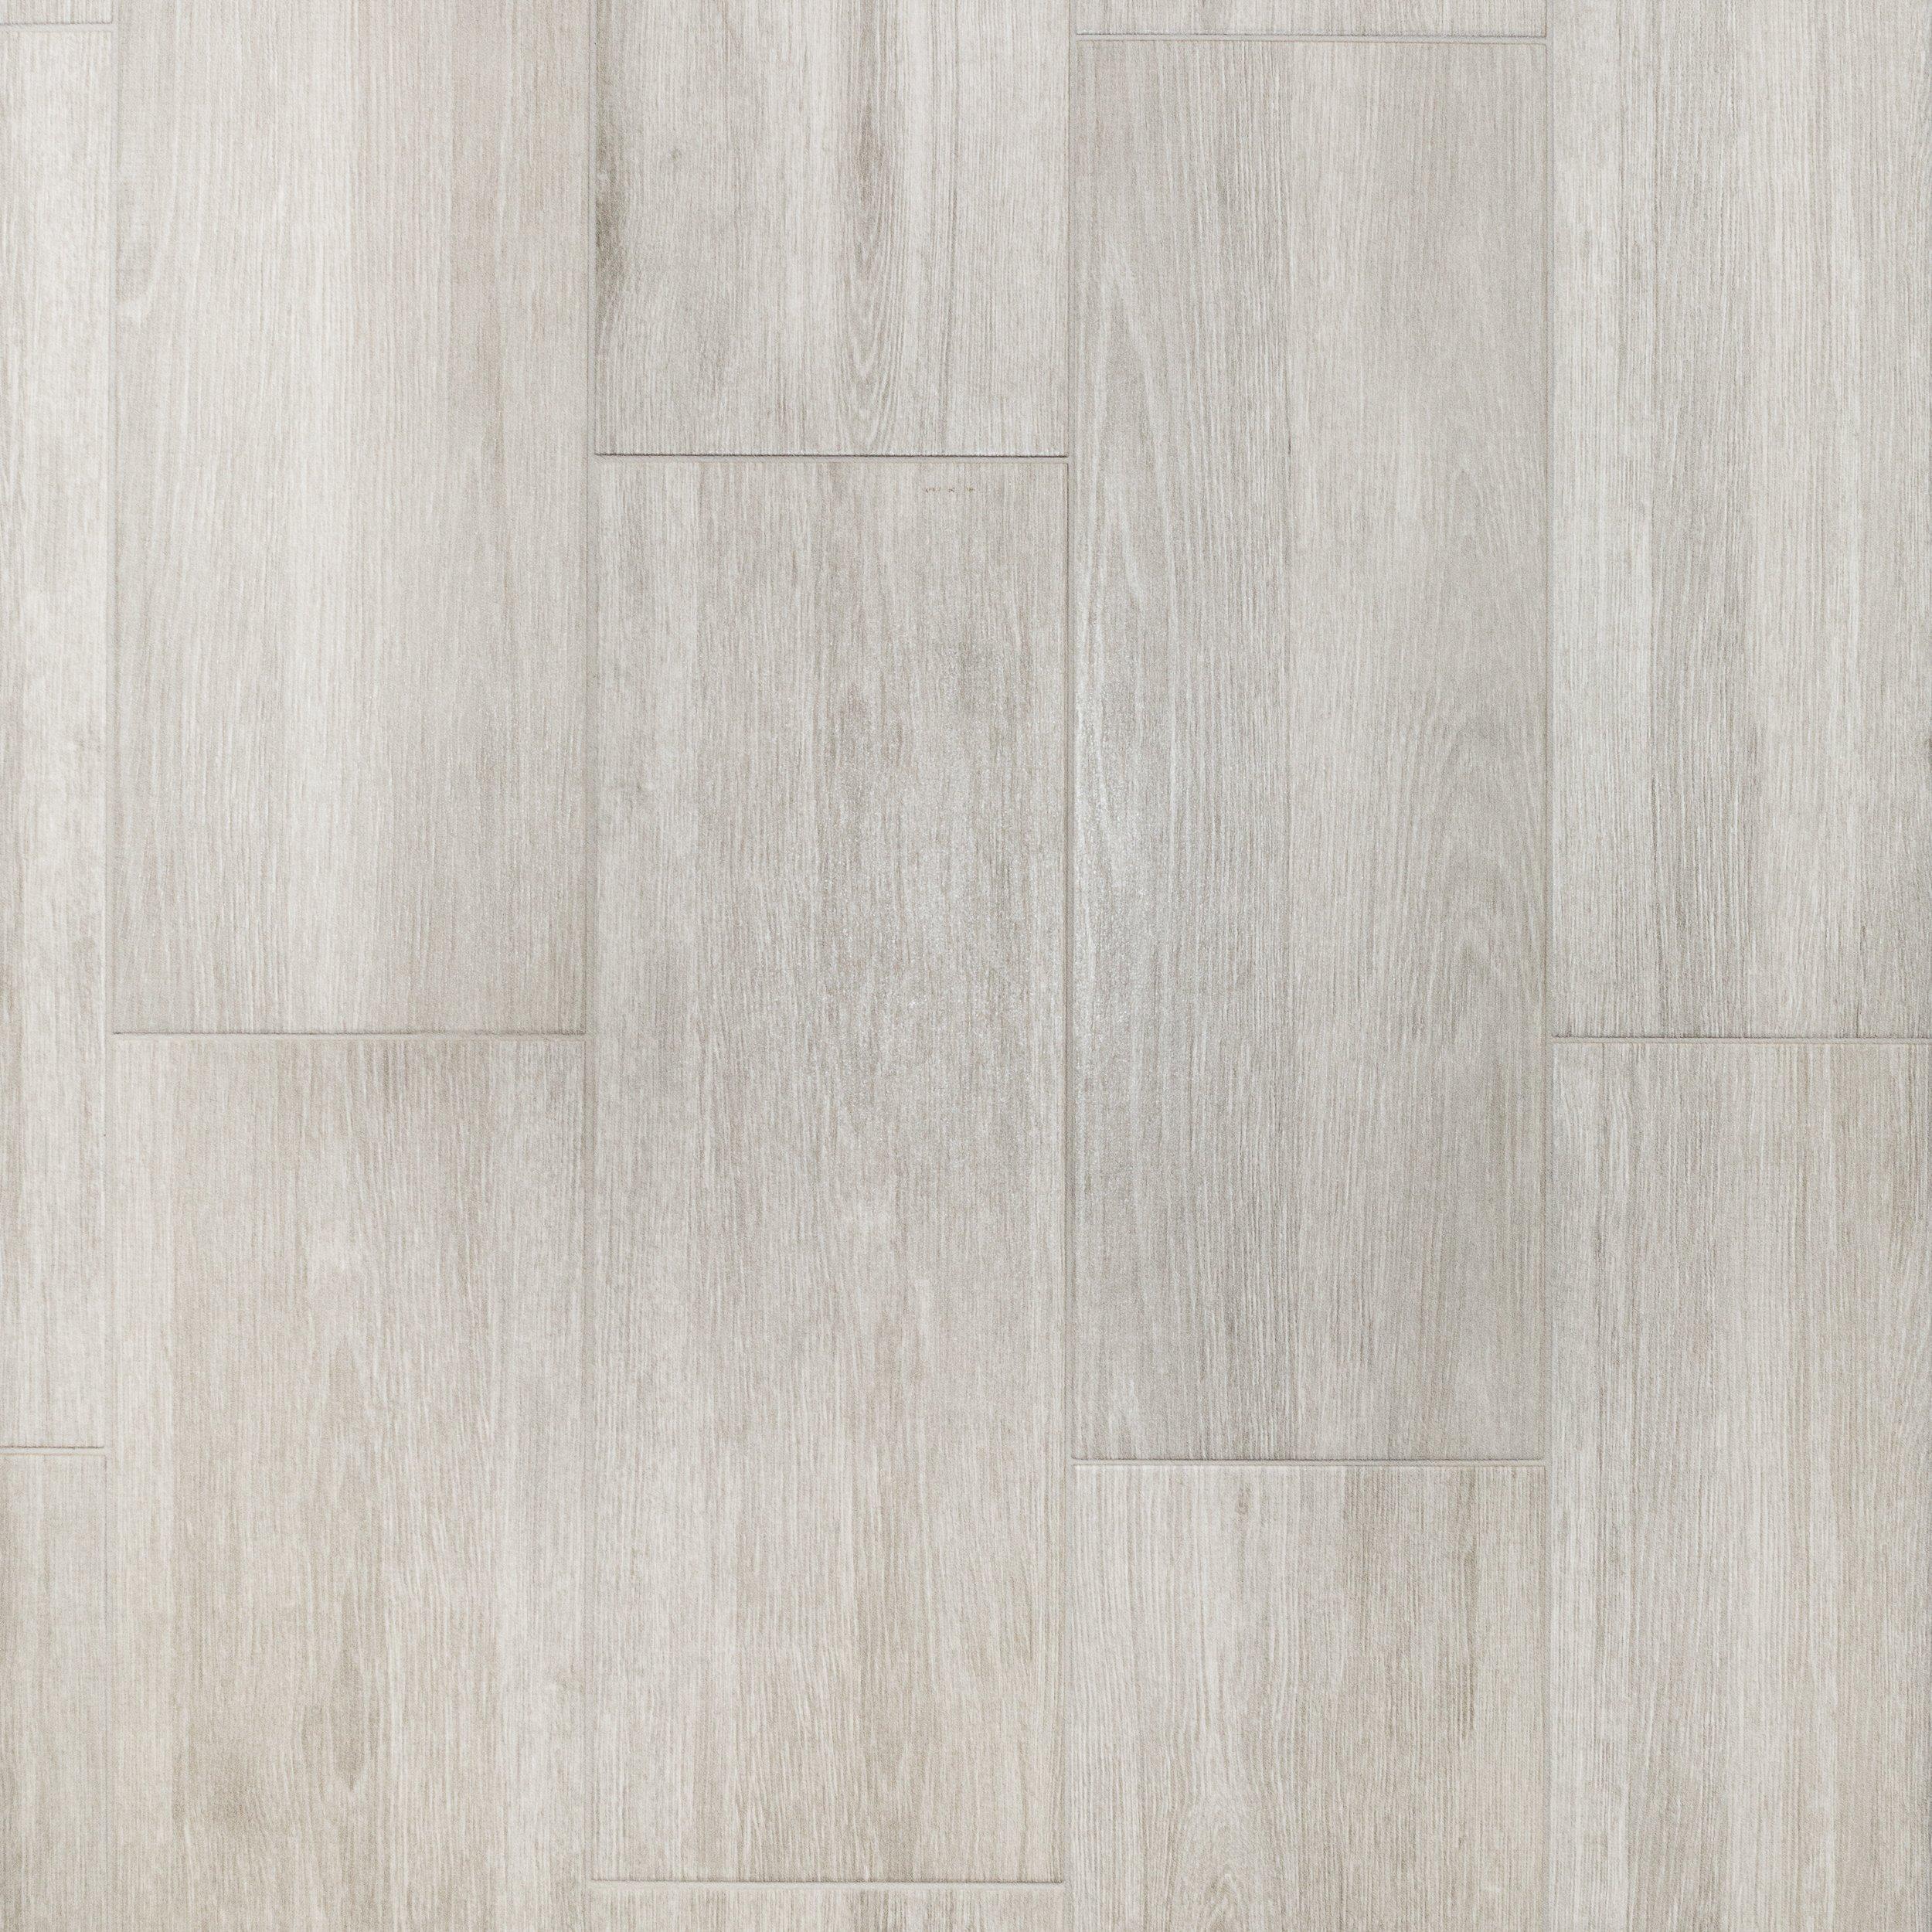 Ceramic floor tiles ronne gris wood plank ceramic tile QBBZSUR